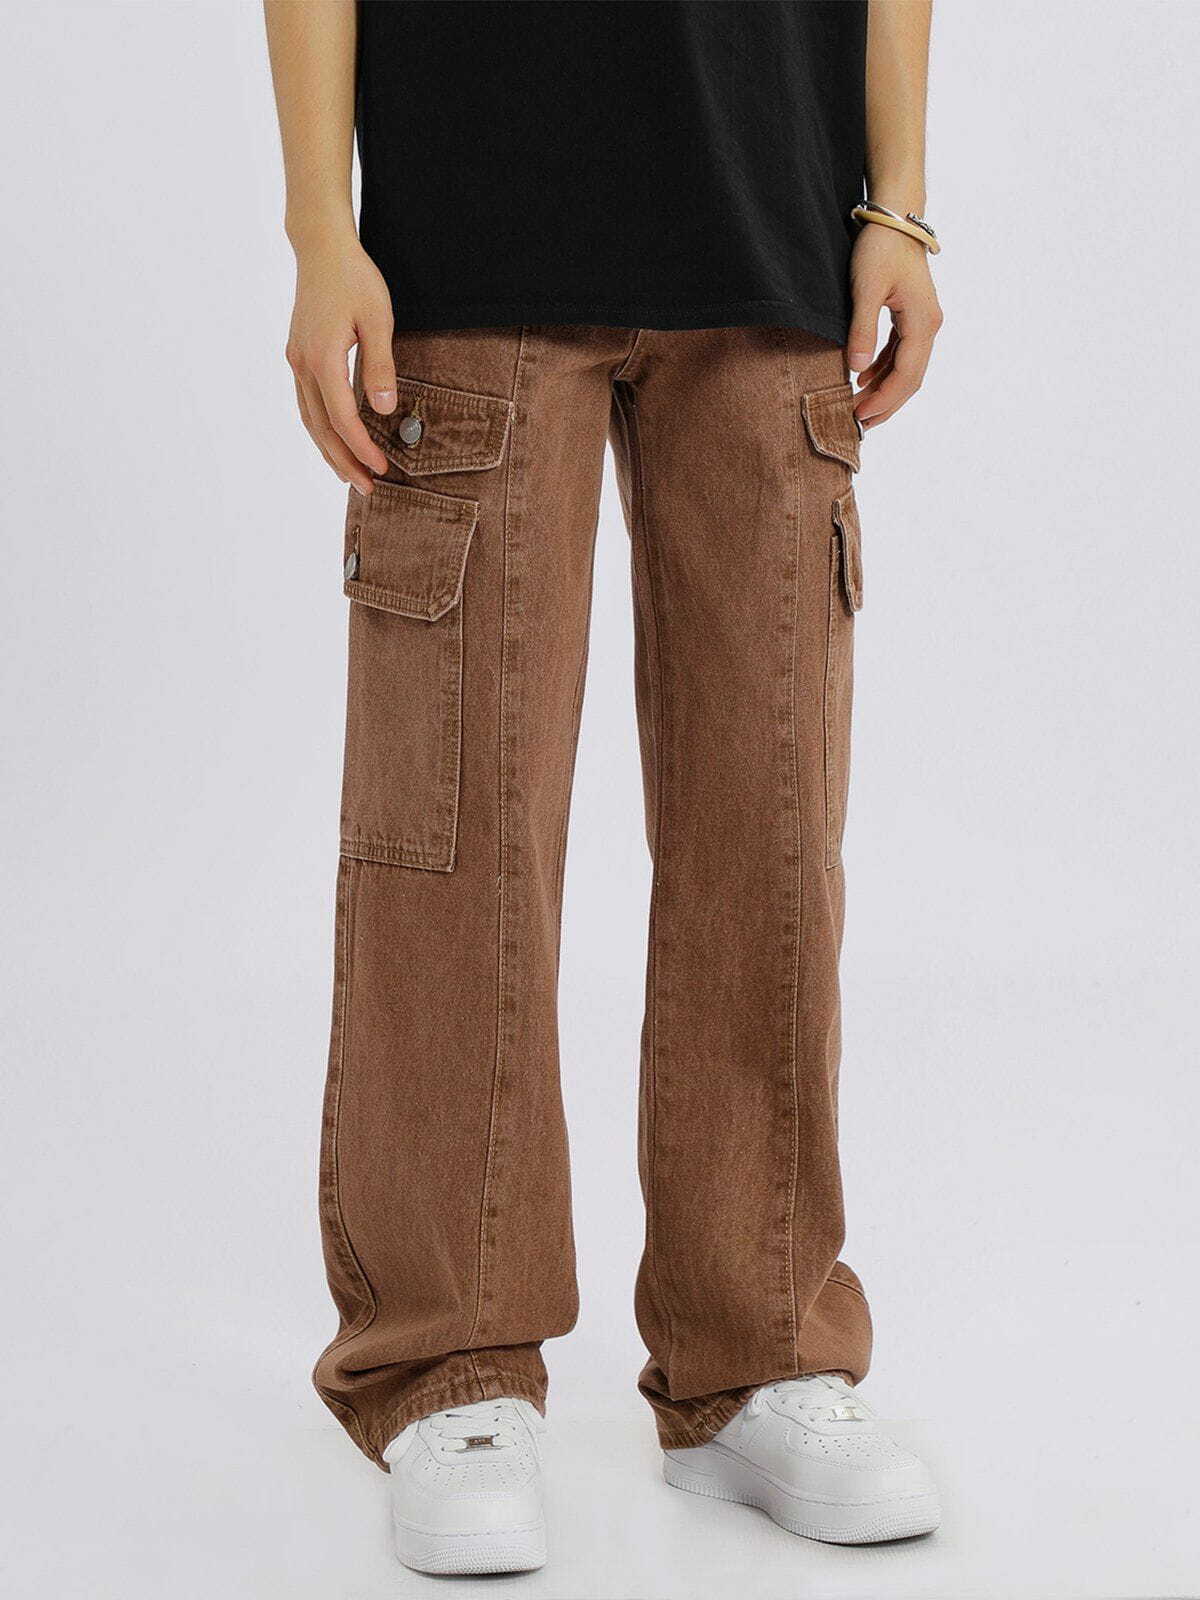 vintage multi pocket jeans urban chic & trendy fit 7747